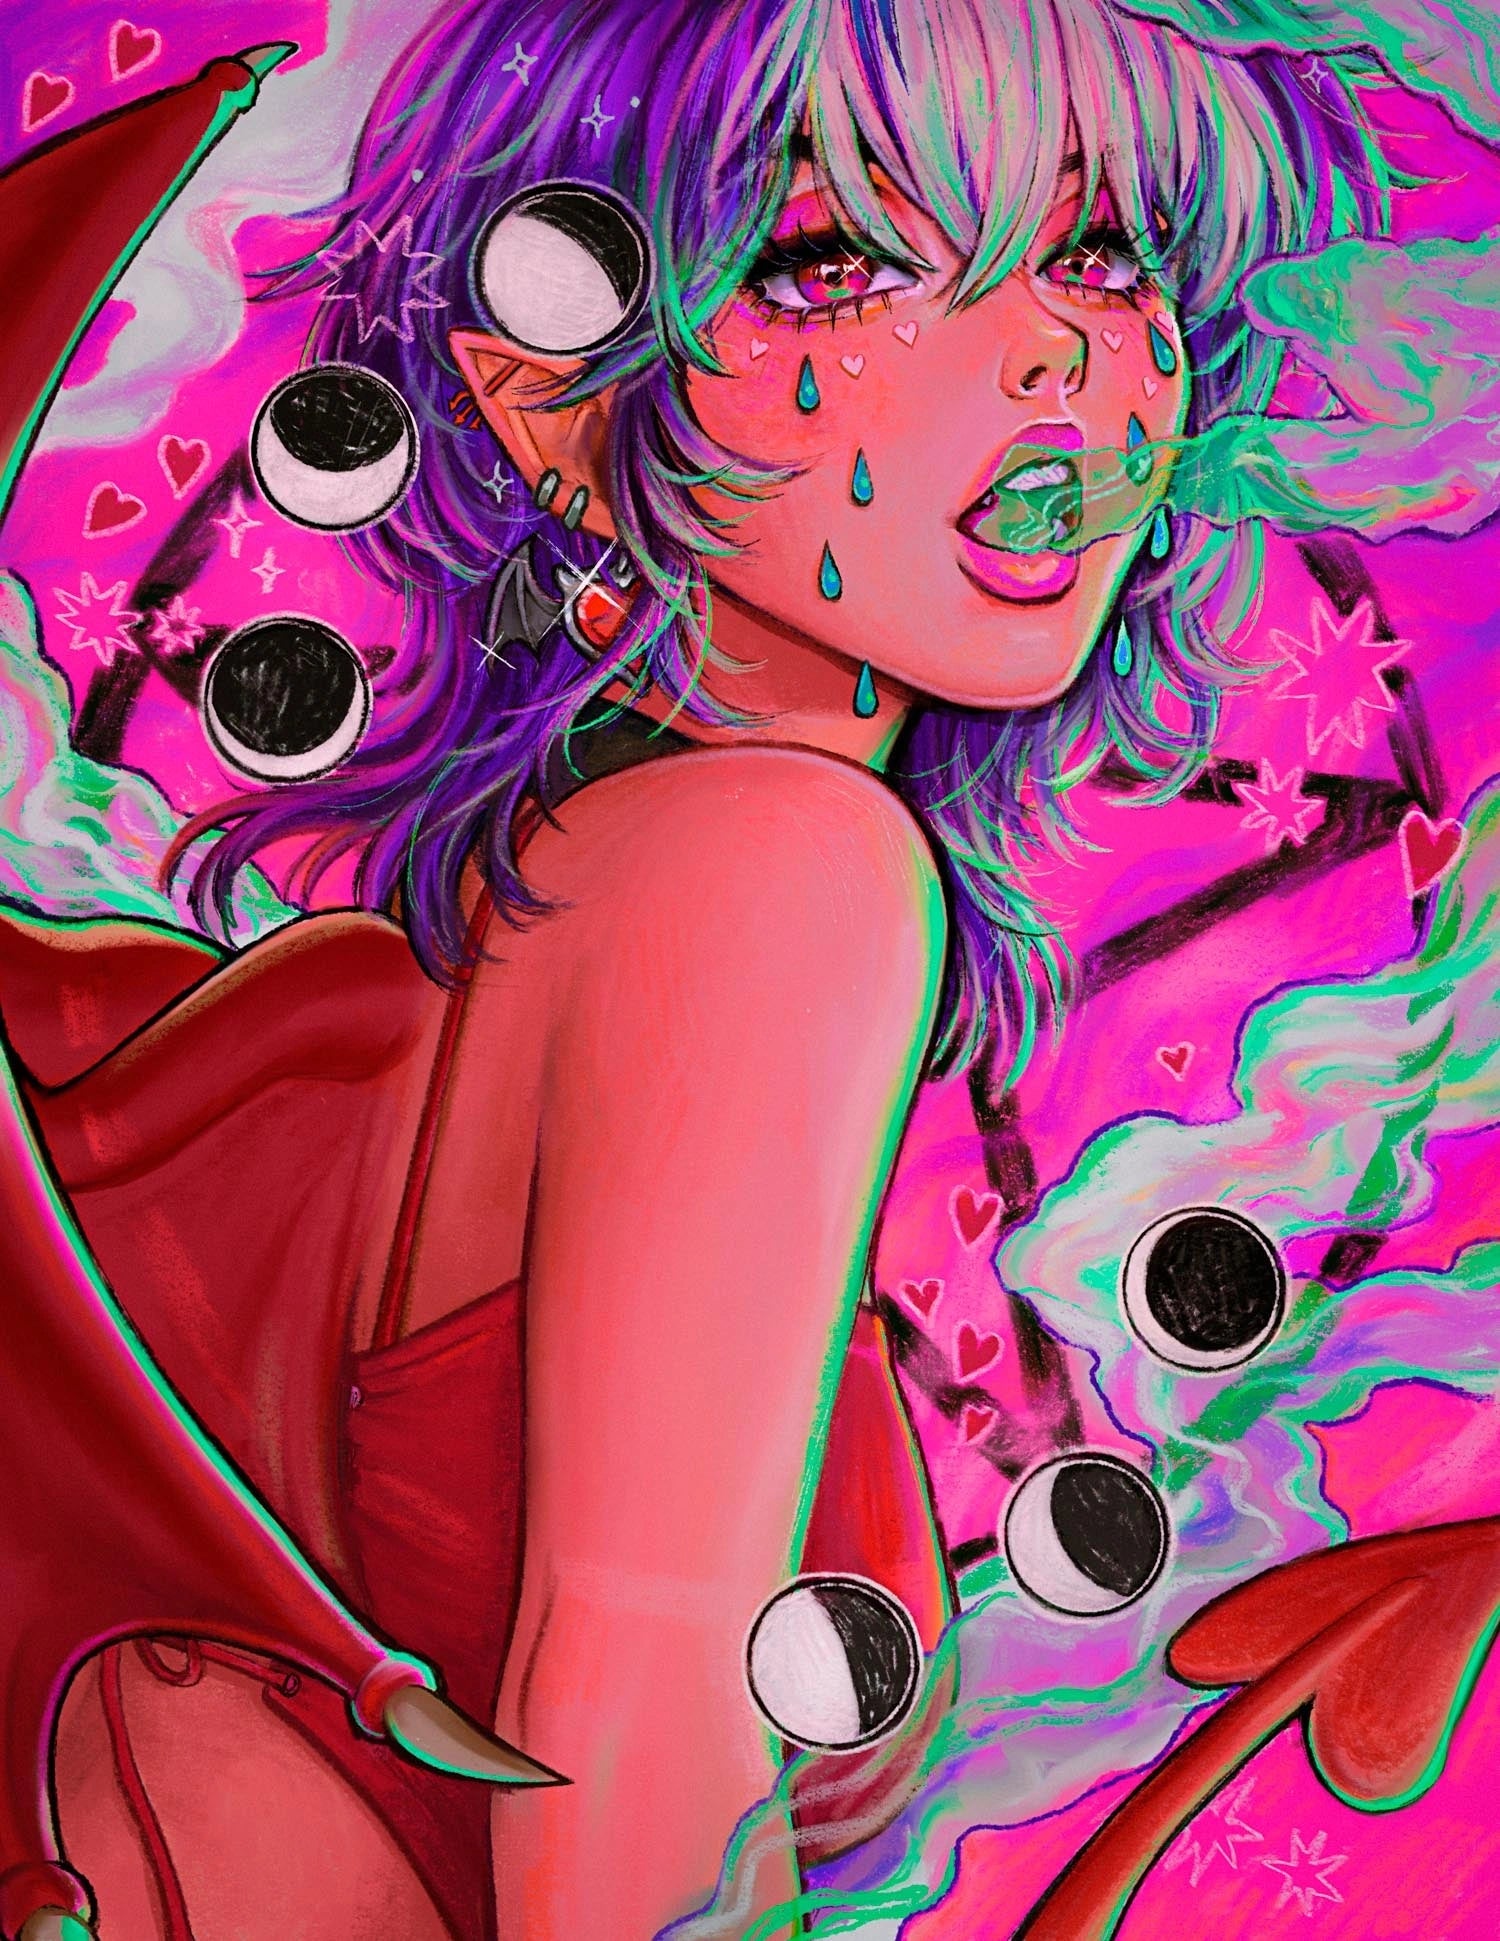 Cyberpunk Anime Girl by Toon Lord Anime Aesthetic Wall Art 